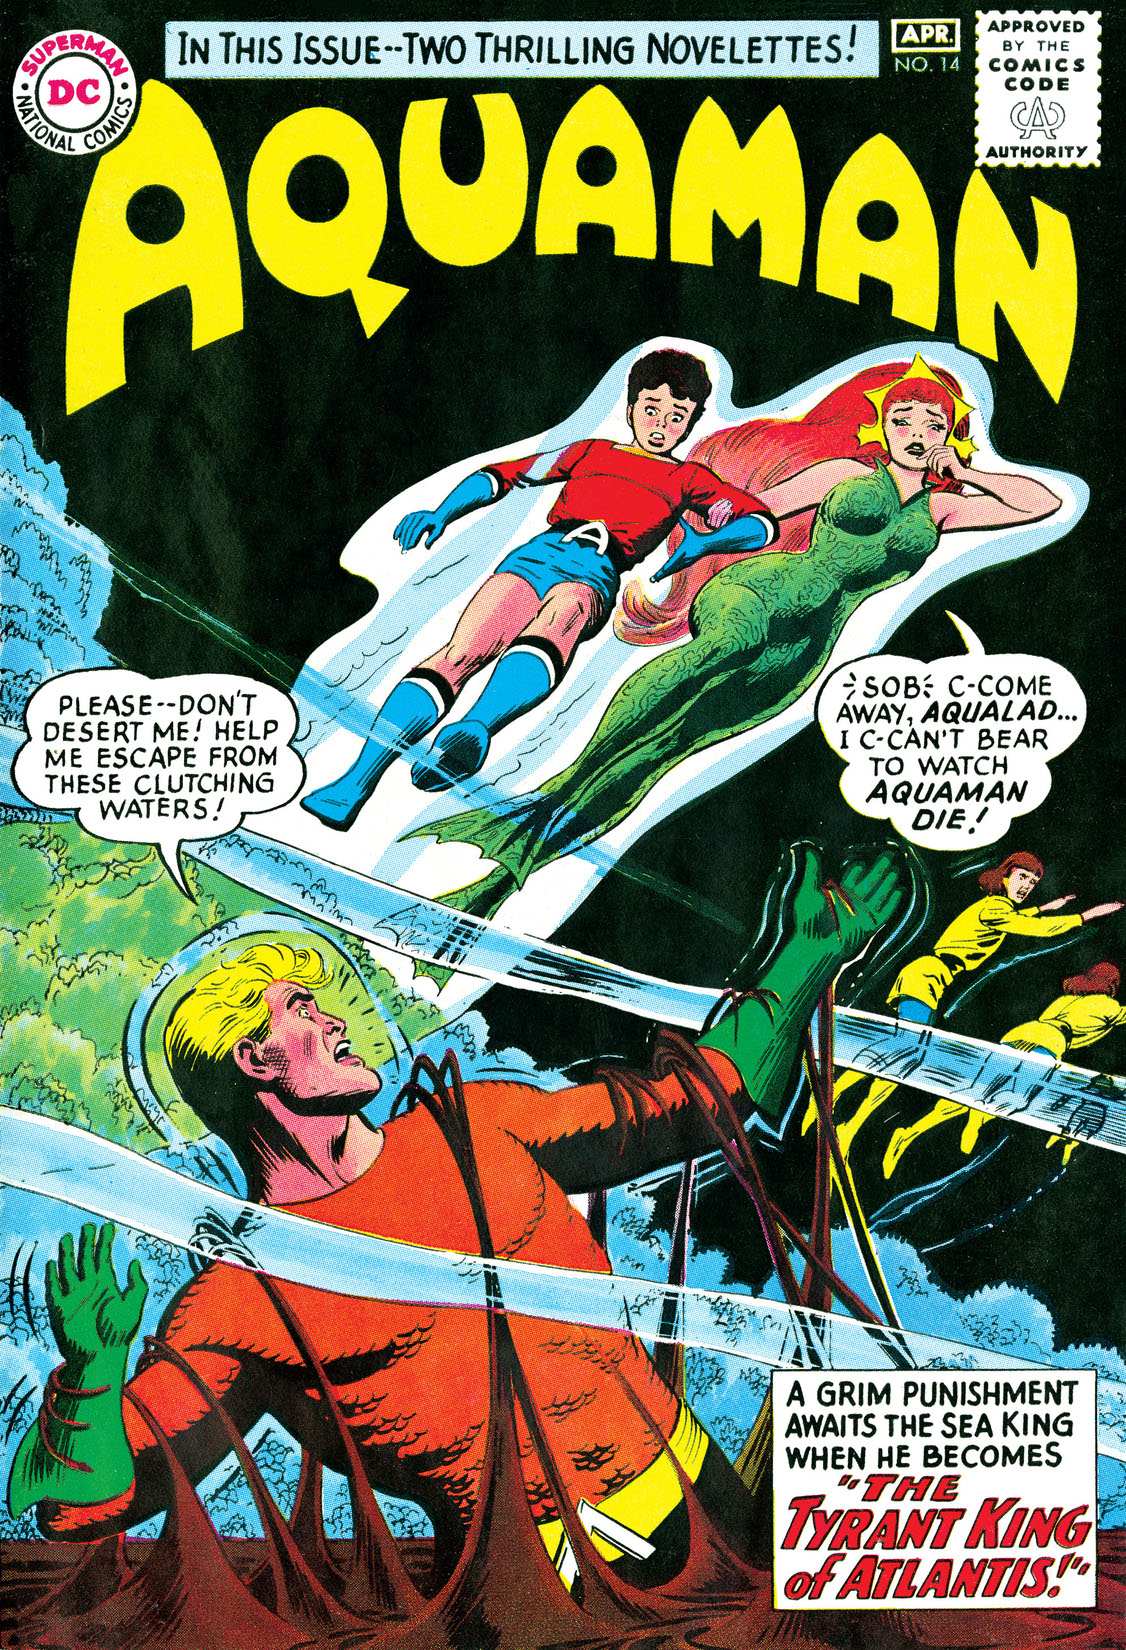 Aquaman (1962-) #14 preview images